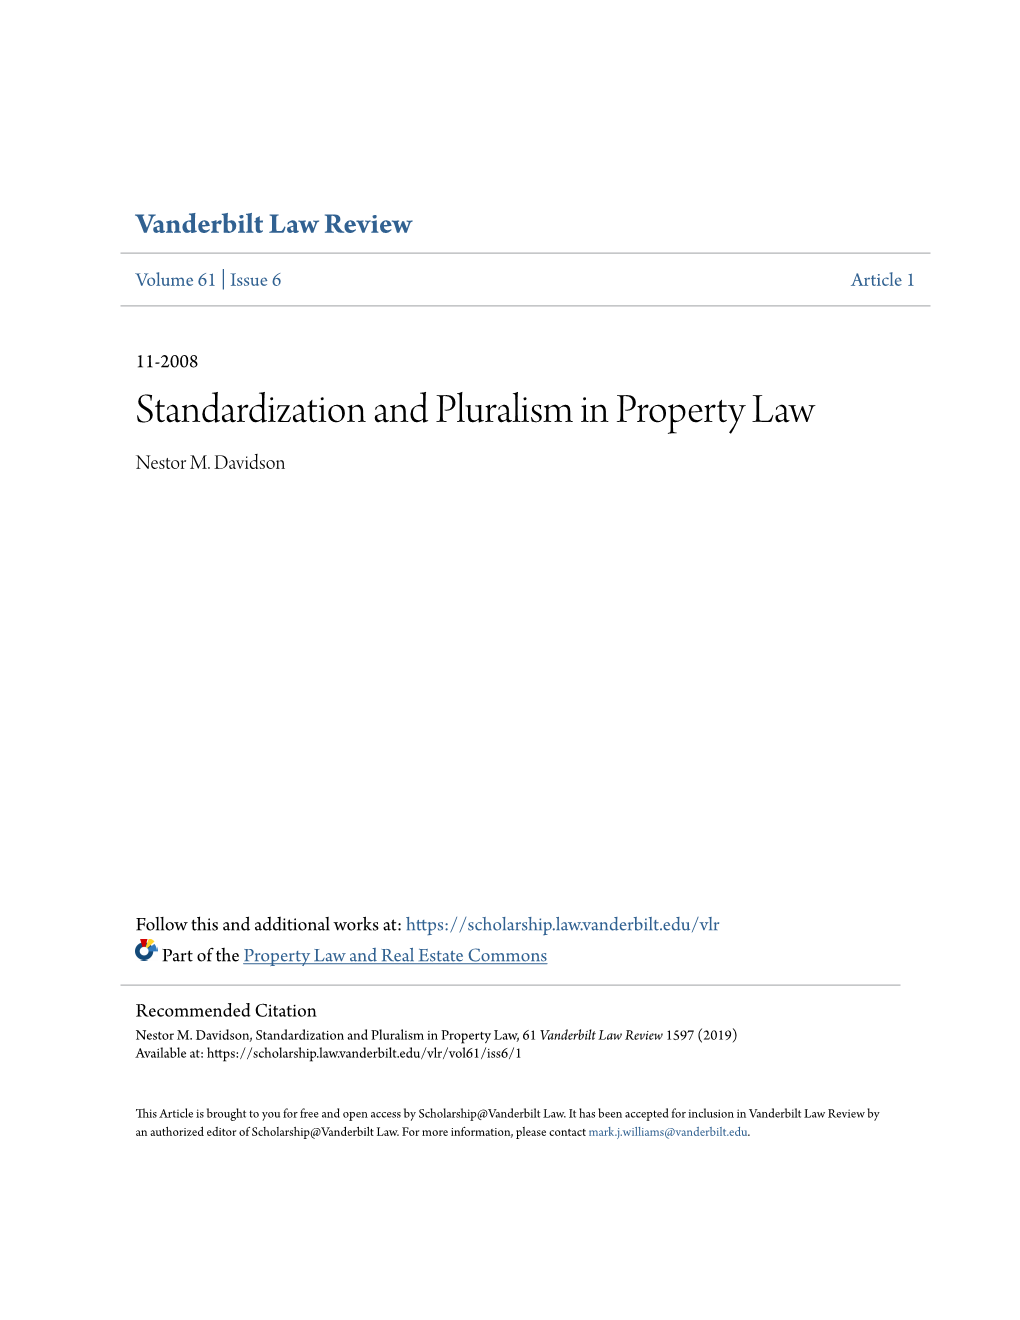 Standardization and Pluralism in Property Law Nestor M